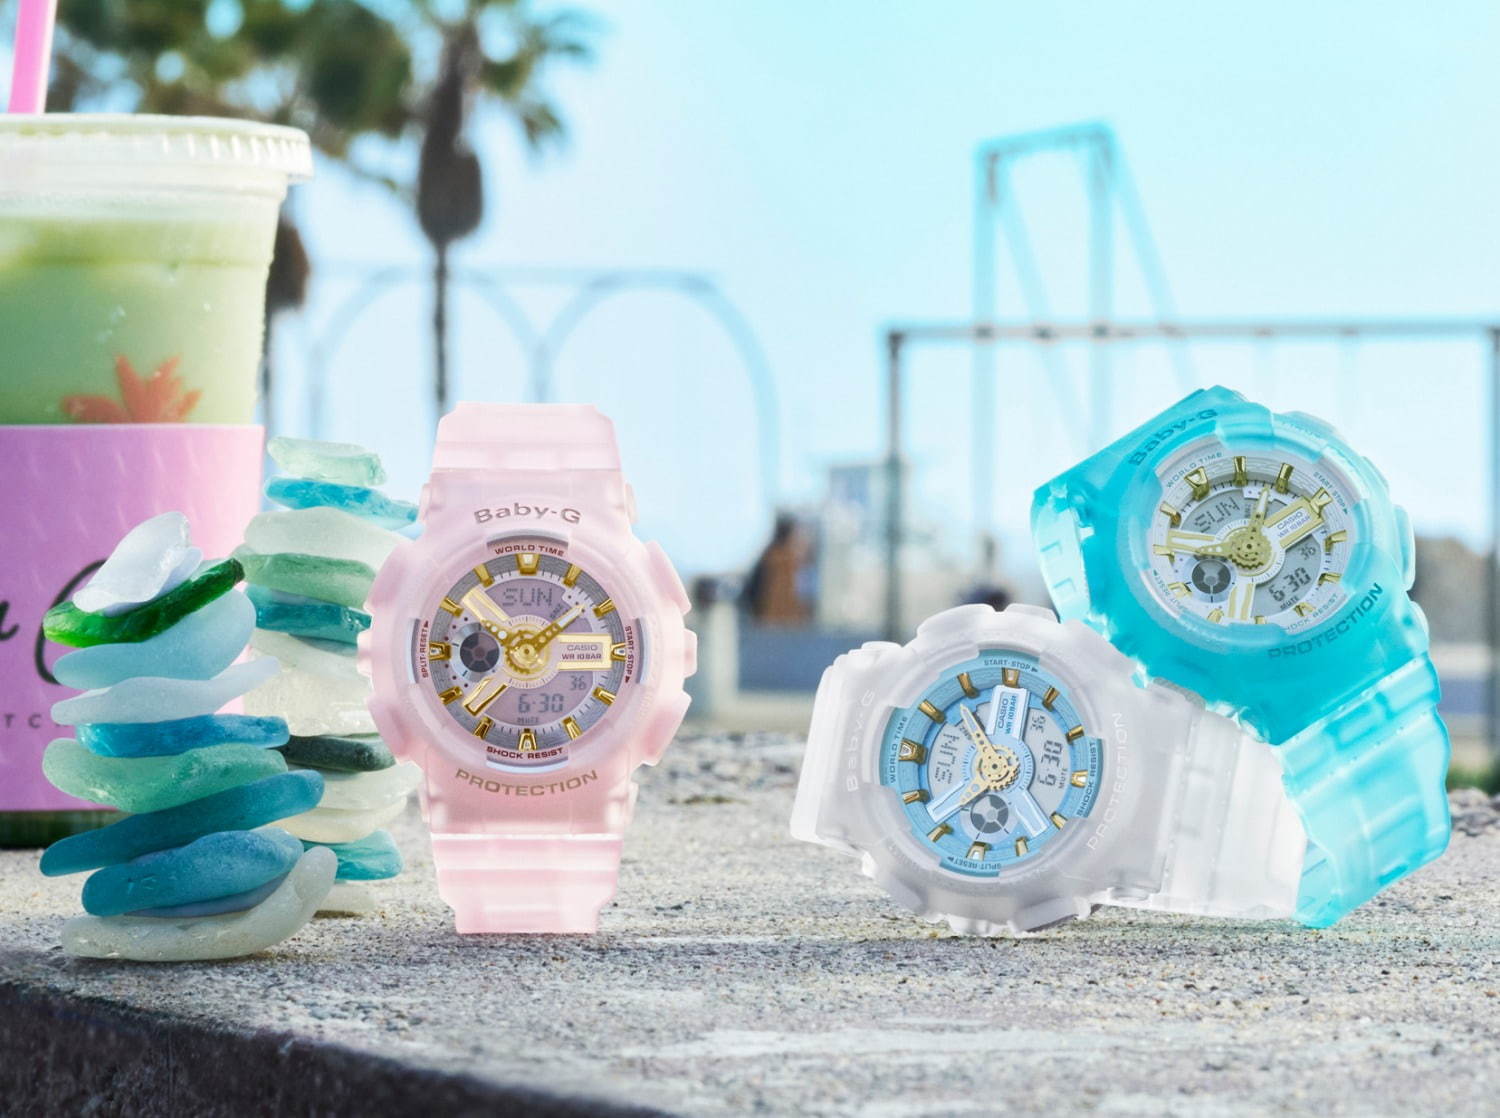 Baby Gの新作 シーグラス カラーズ 浜辺の宝石 シーグラス を表現したスケルトン素材の腕時計 ファッションプレス